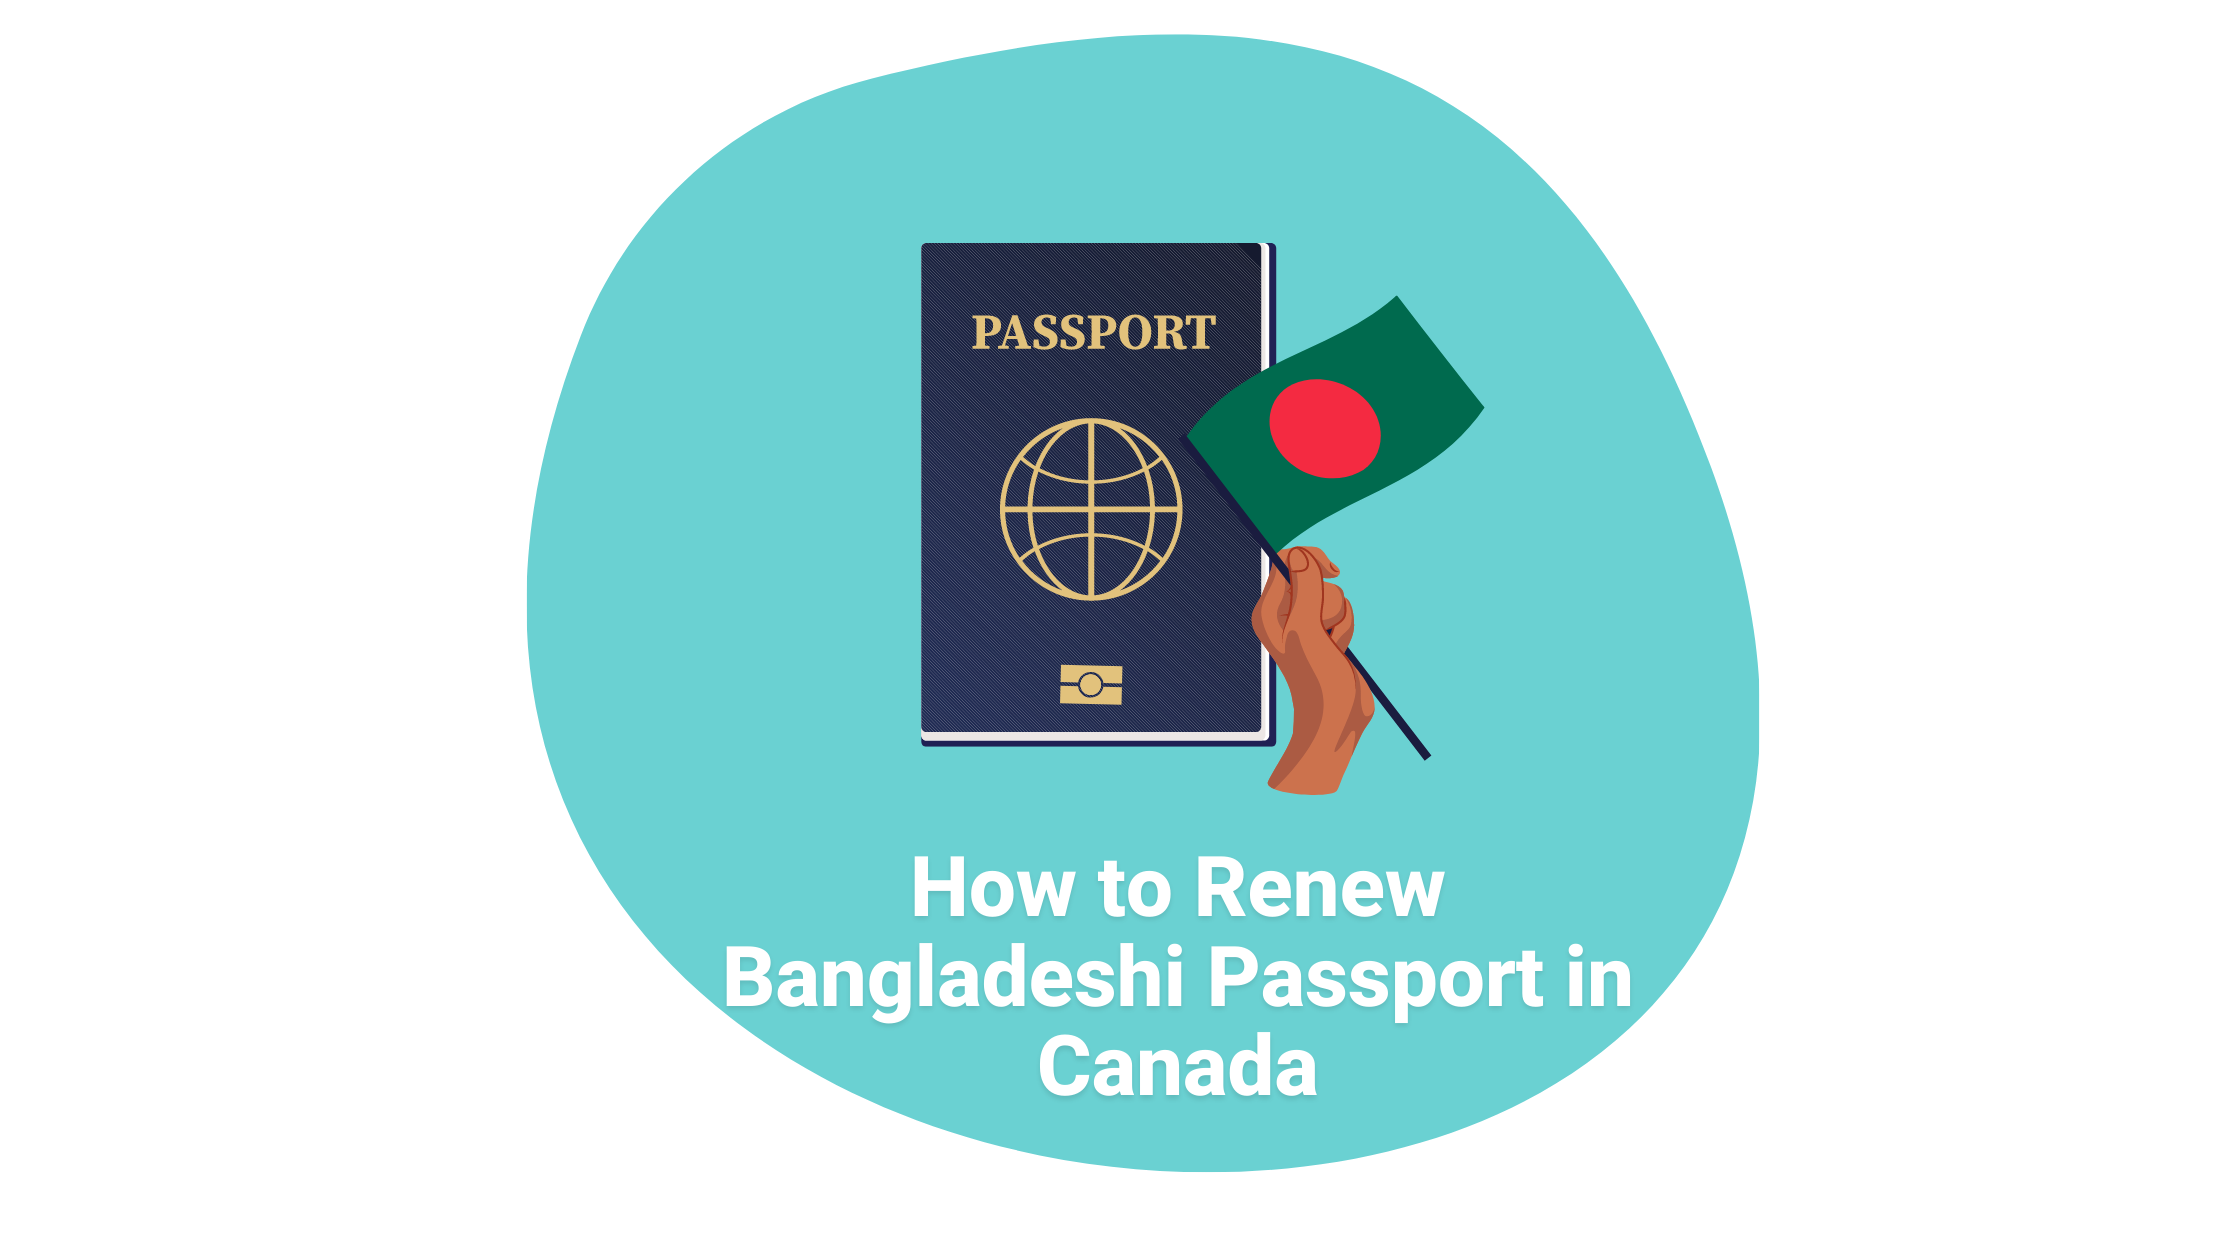 How to Renew Bangladeshi Passport in Canada